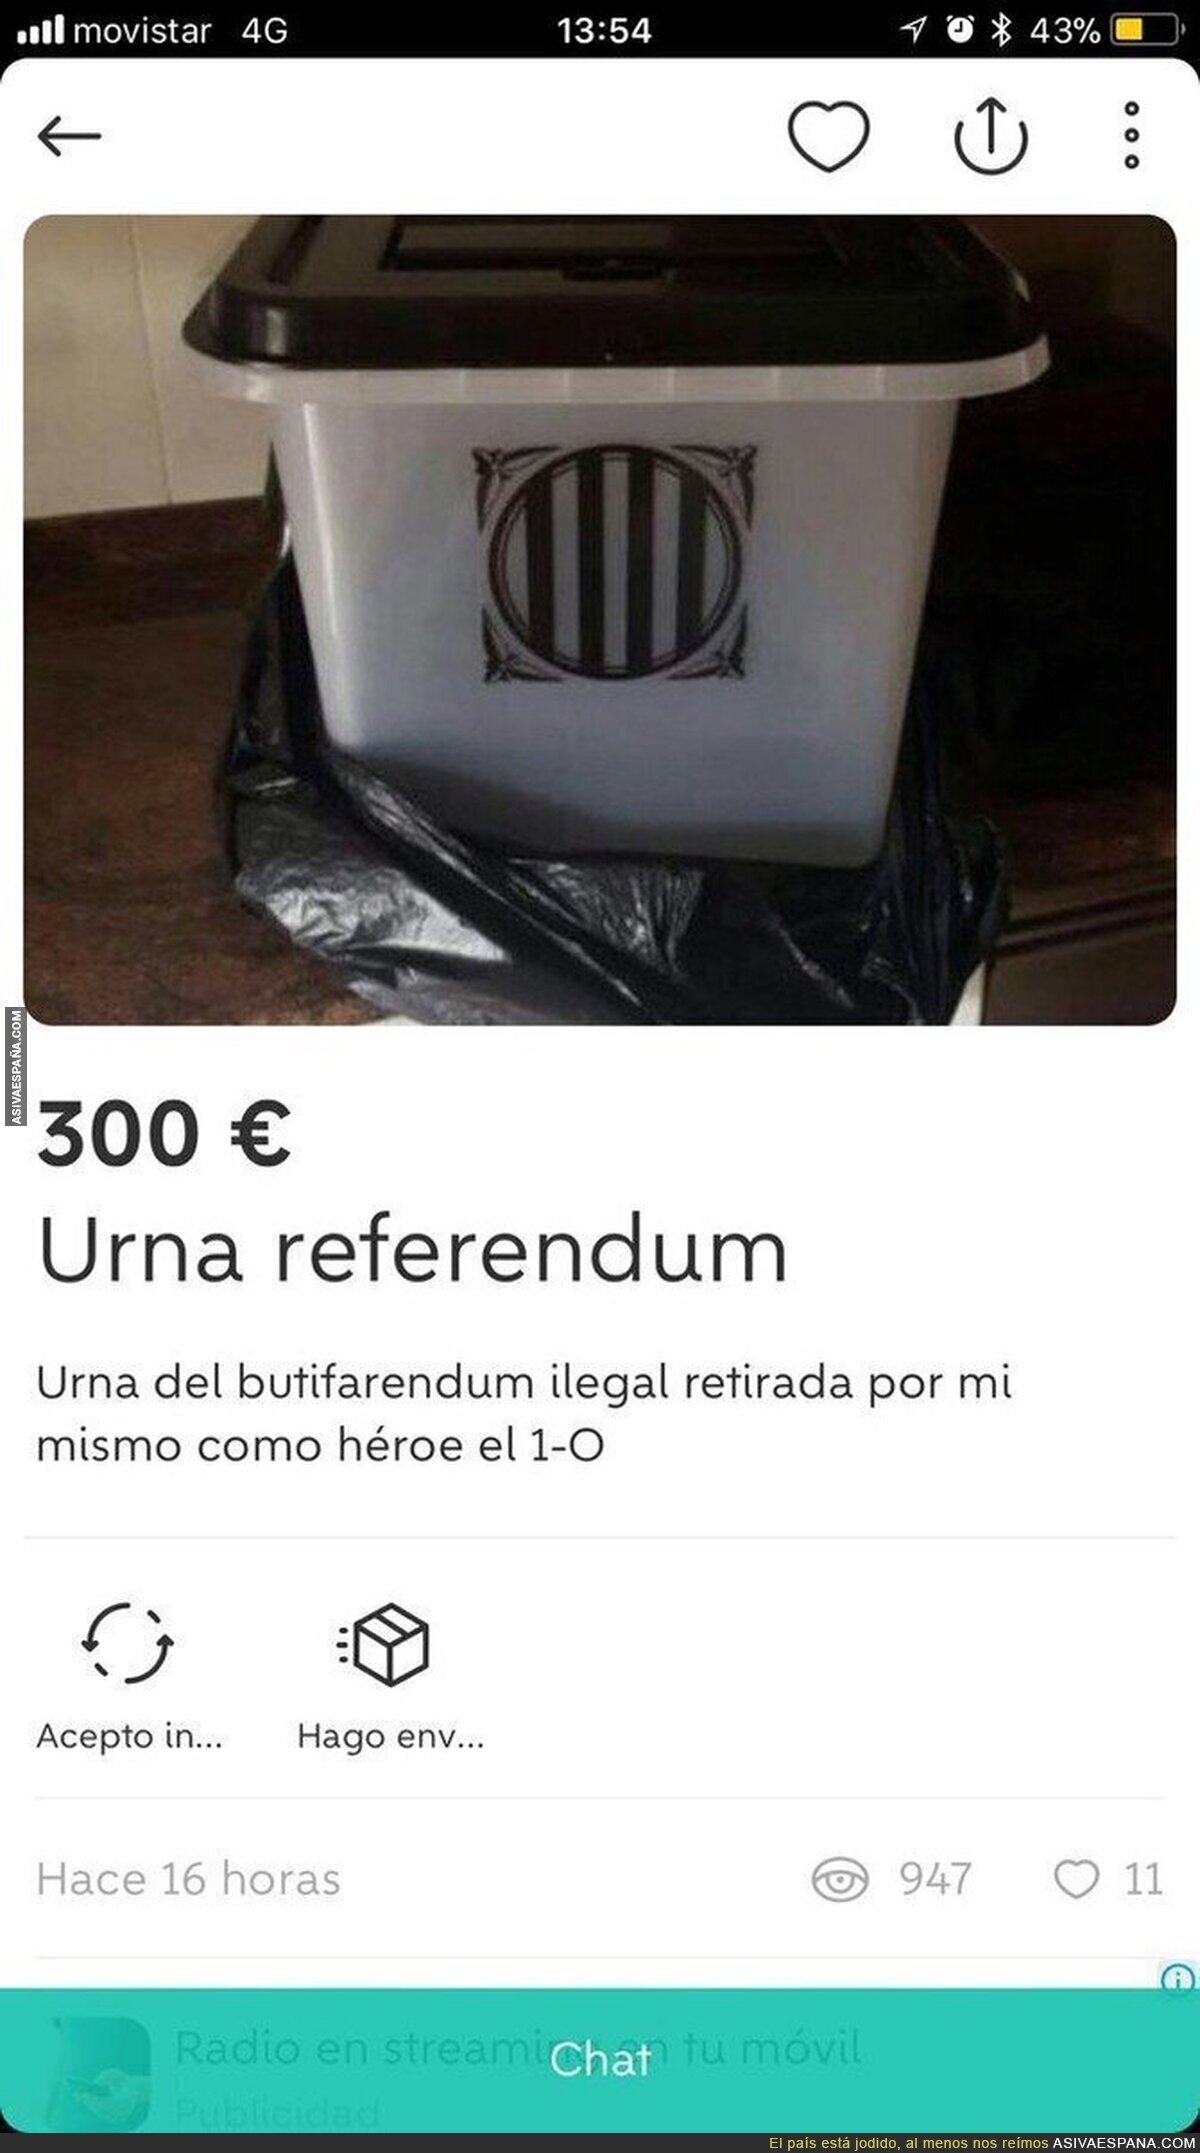 Ponen a la venta en Wallapop una urna requisada del referéndum ilegal de Catalunya